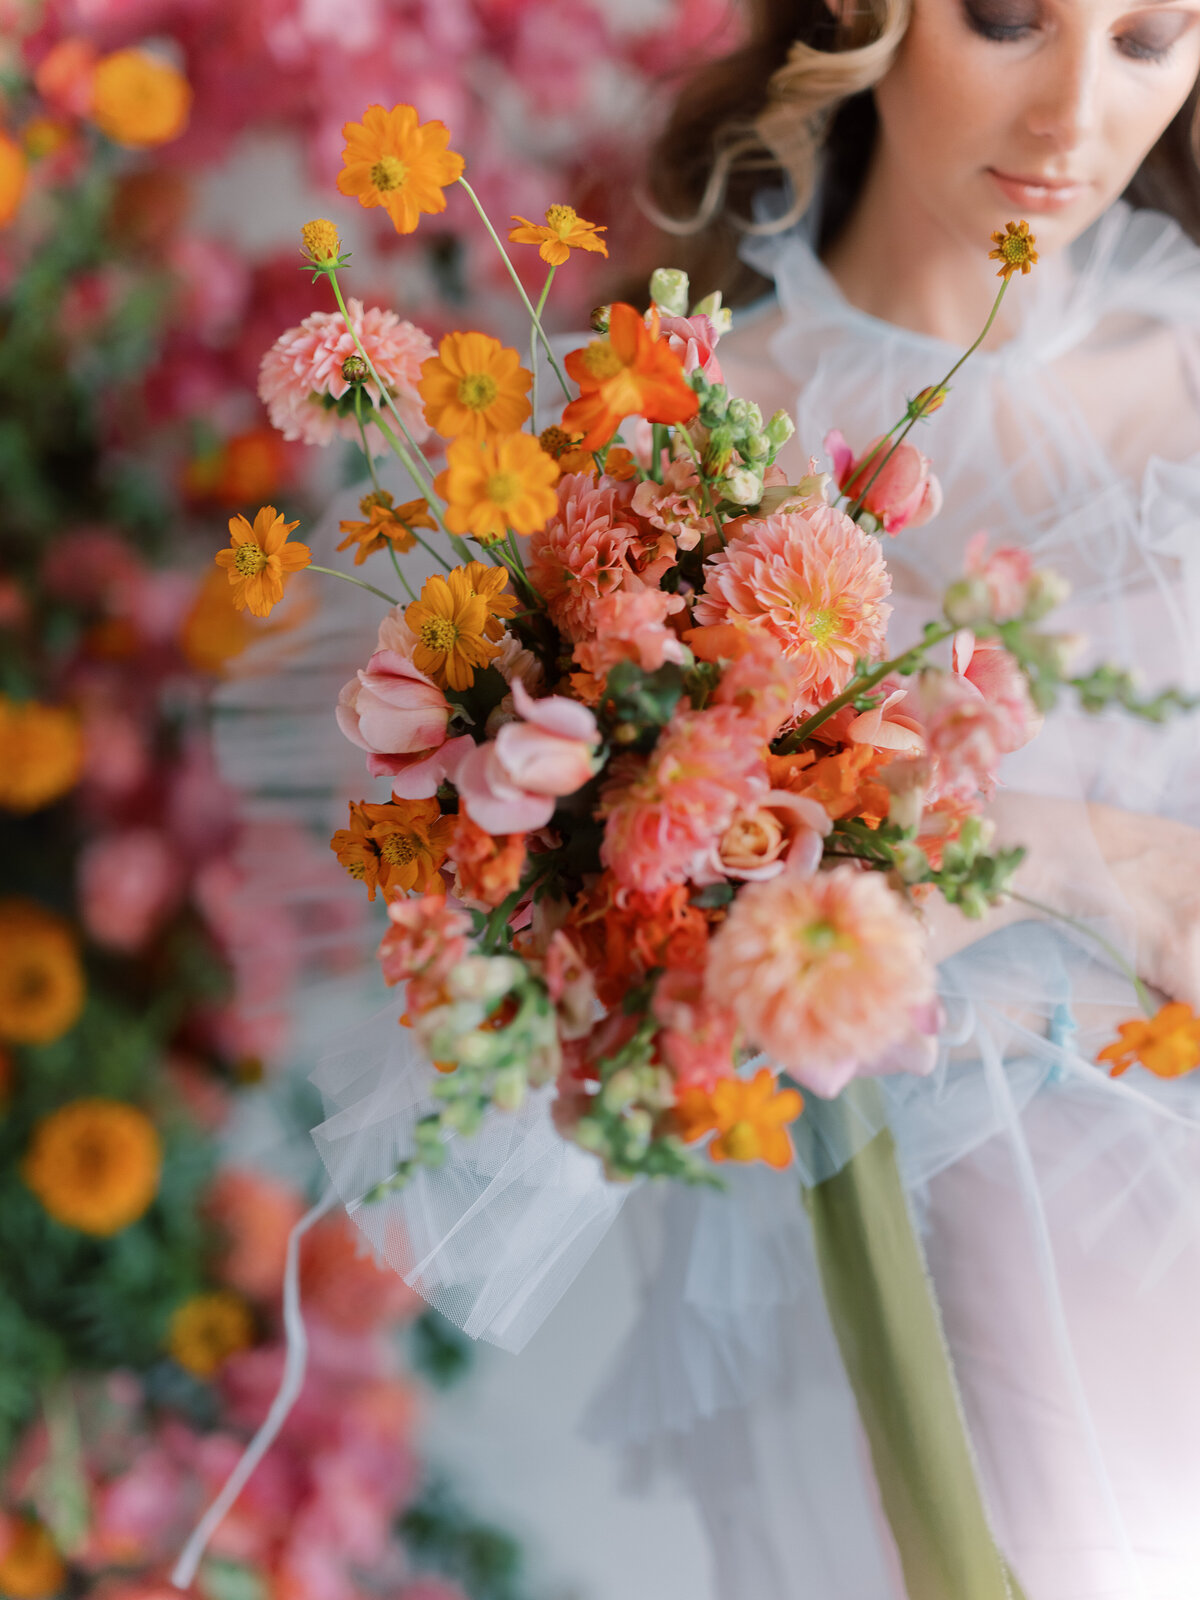 Sarah Rae Floral Designs Wedding Event Florist Flowers Kentucky Chic Whimsical Romantic Weddings43